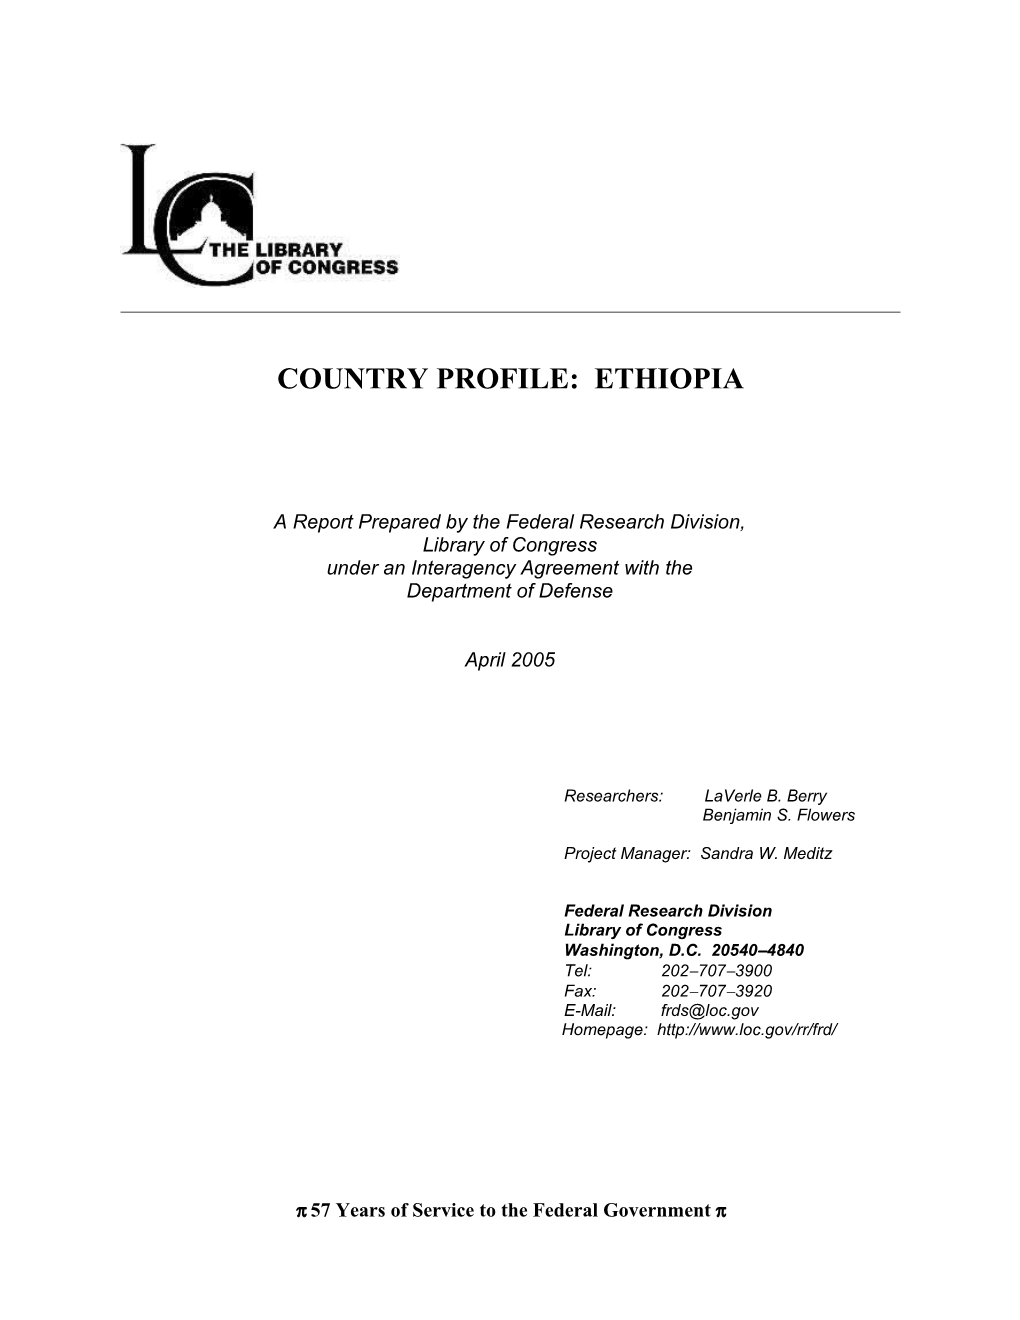 Country Profile: Ethiopia